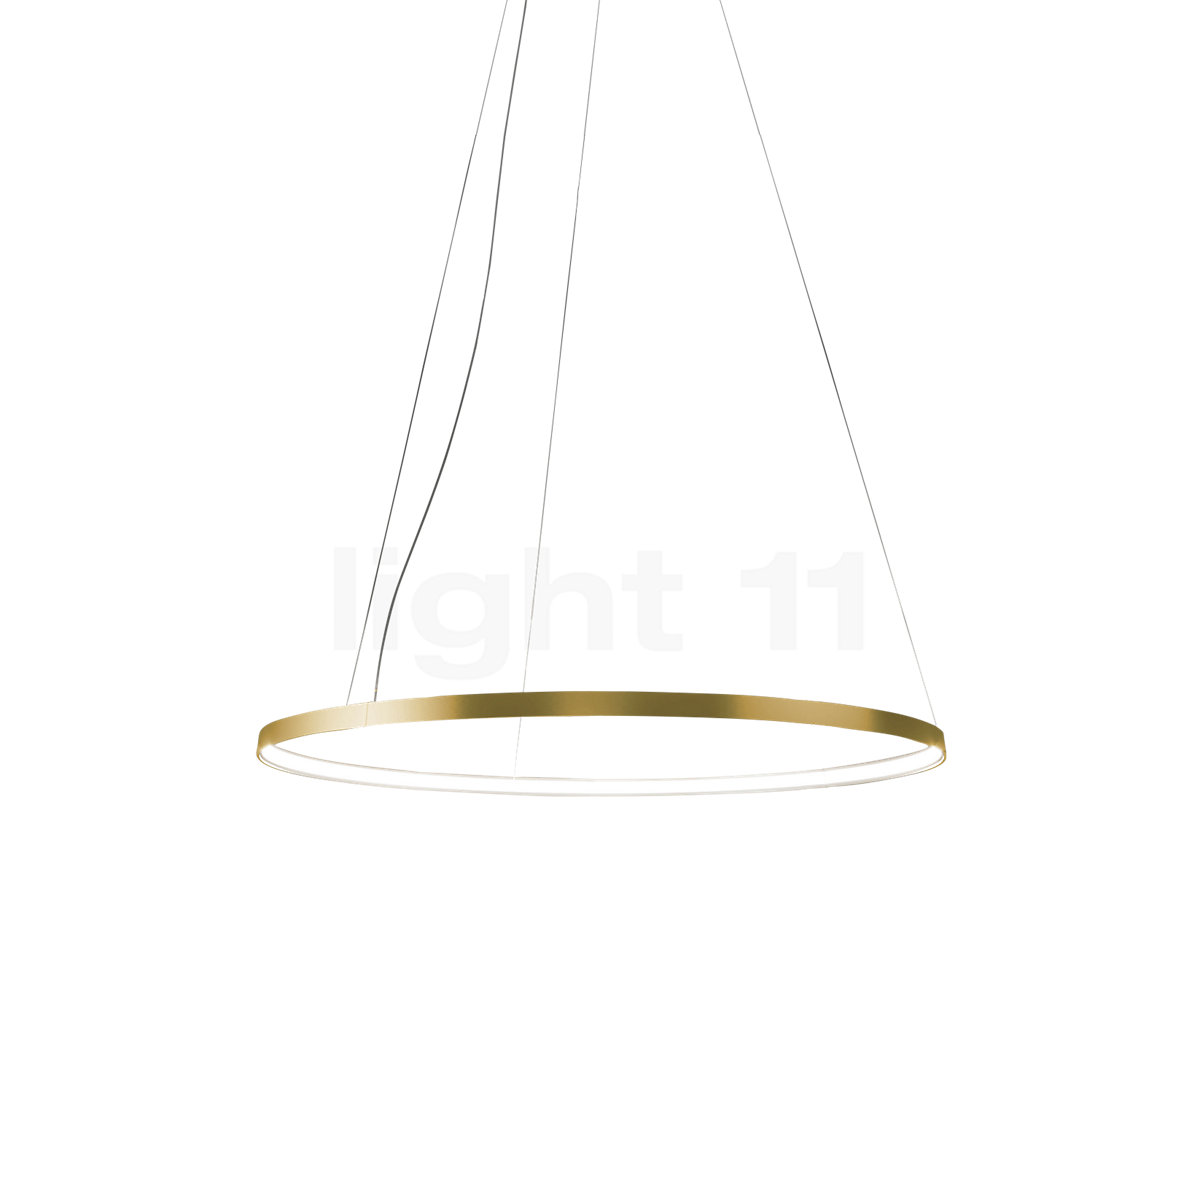 Panzeri Zero Shapes Round Pendant, Round Hanging Light Fixture